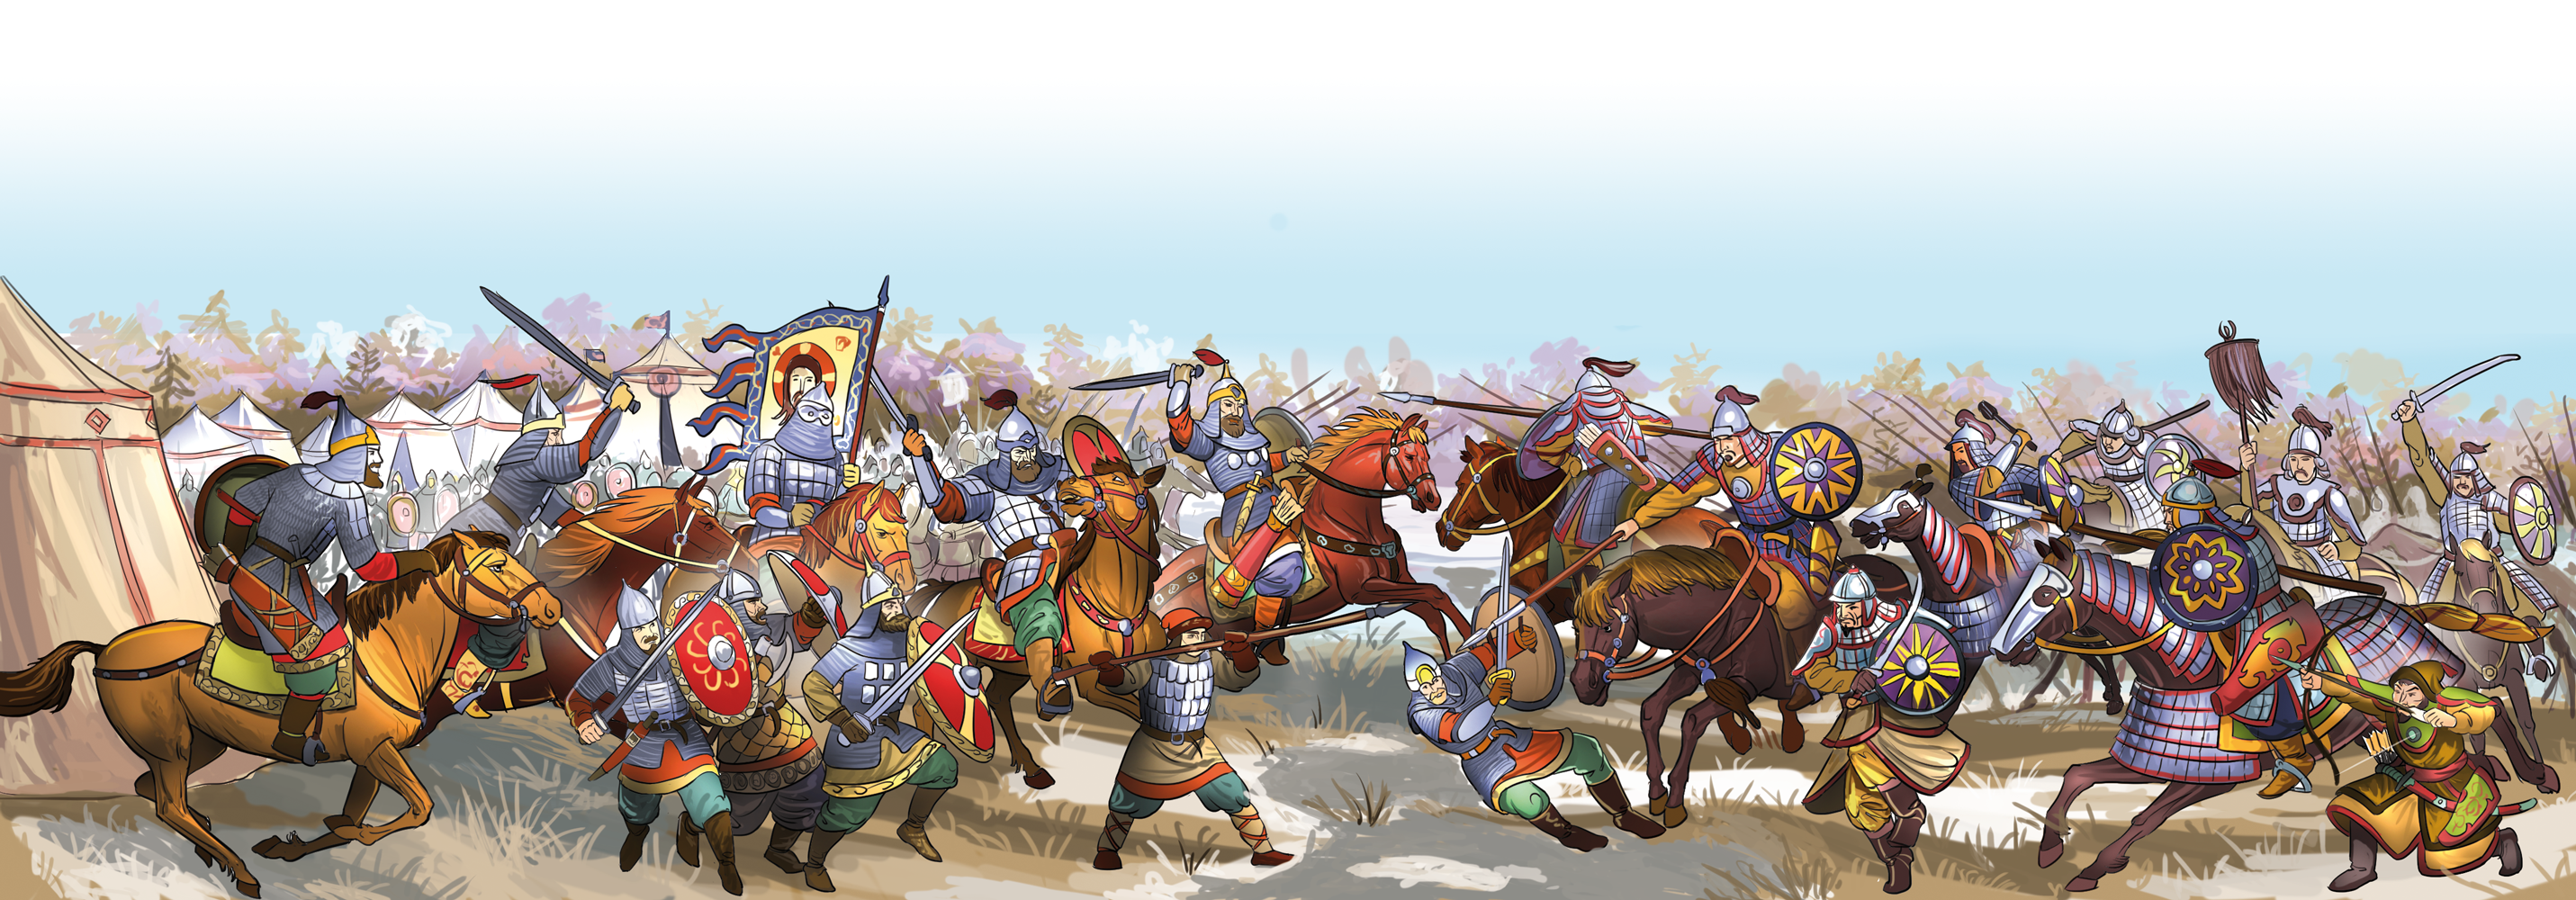 Битва на сити 1. Битва на реке сить — 1238 г.. 1238 Год битва на реке сить. Битва на реке Сити. Сражение на реке сить Батый.